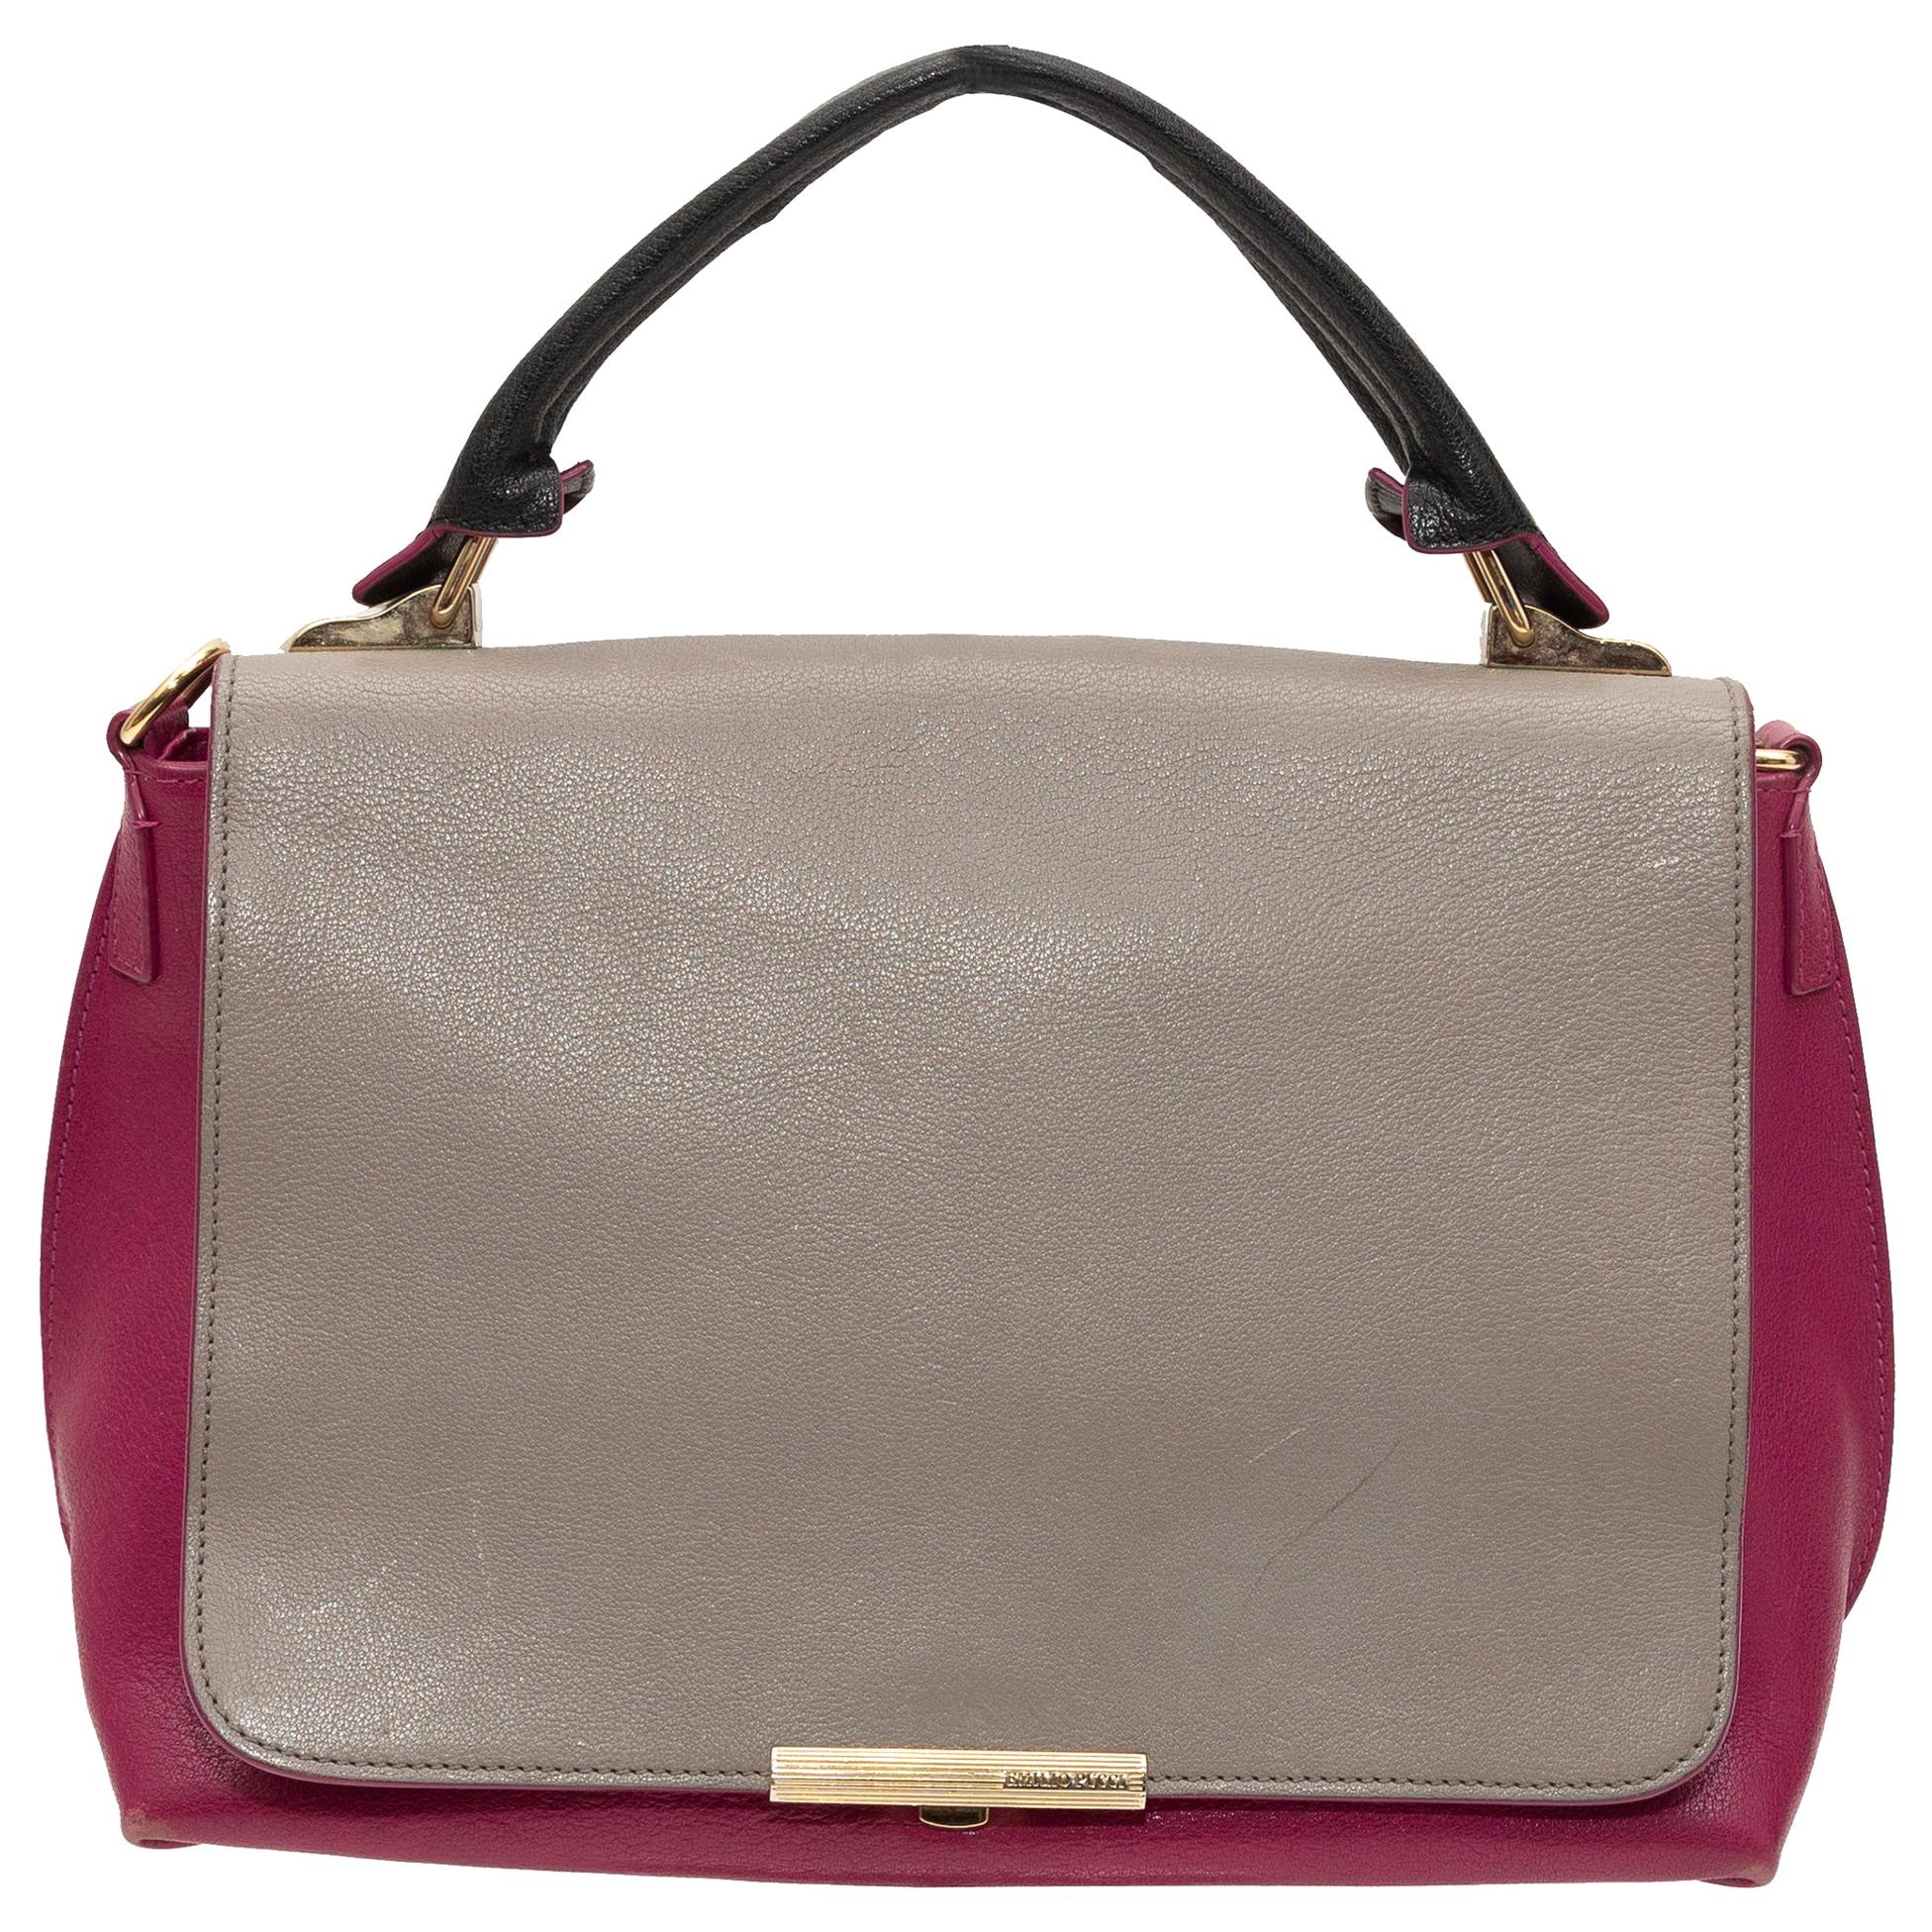 Emilio Pucci Grey & Magenta Leather Shoulder Bag